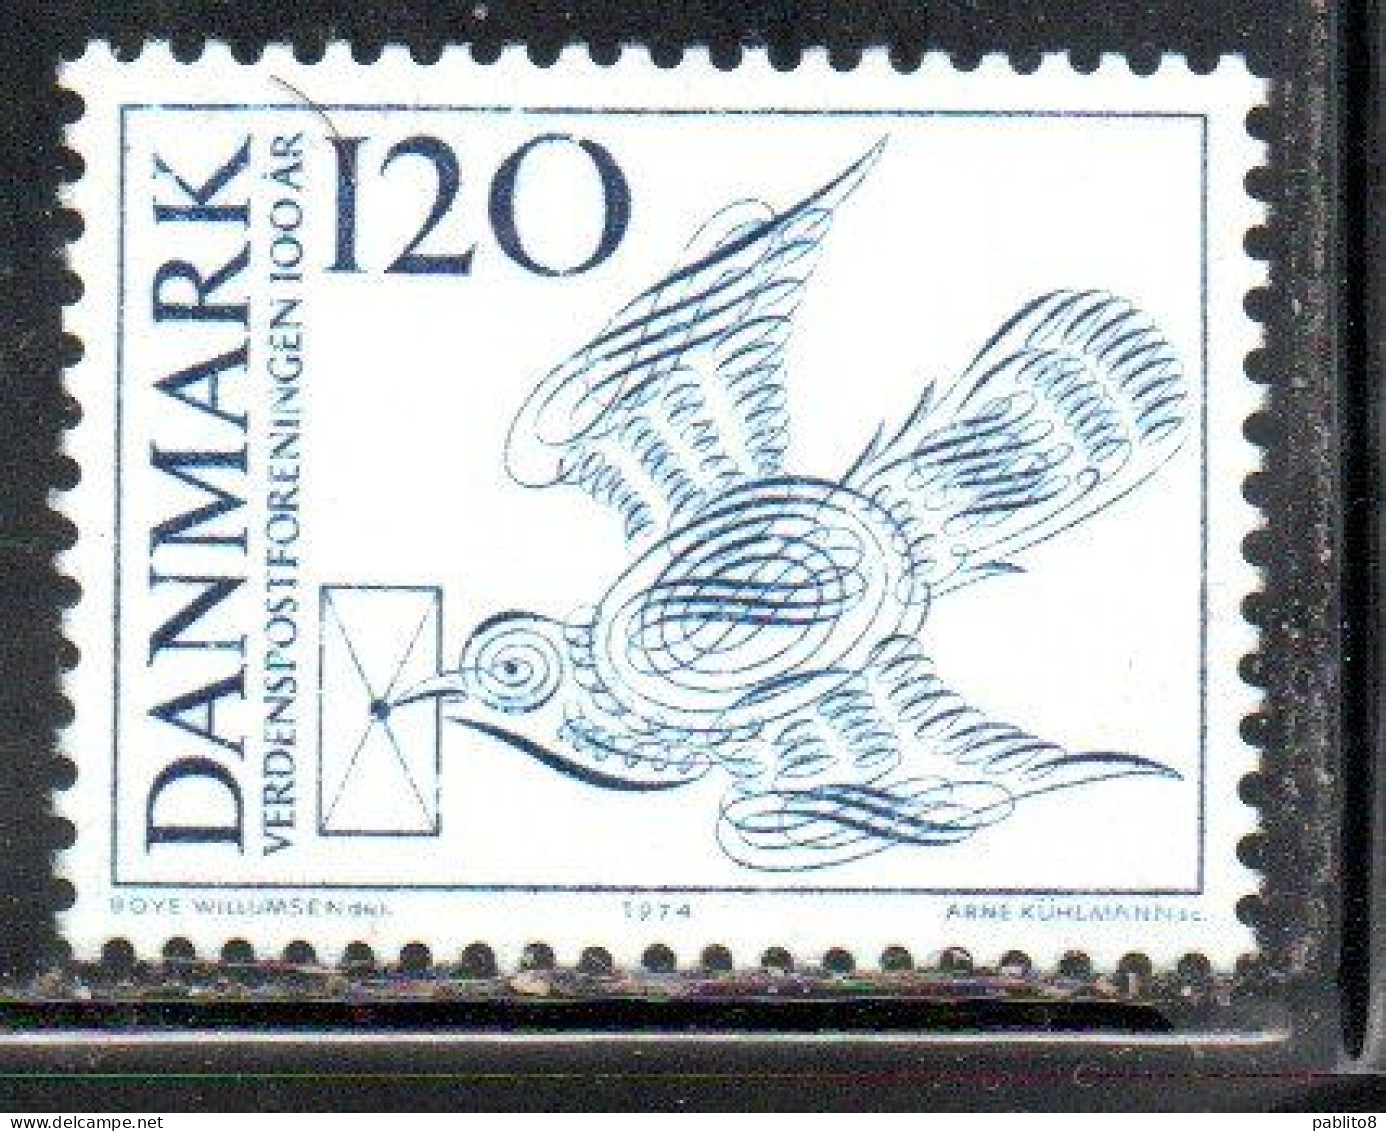 DANEMARK DANMARK DENMARK DANIMARCA 1974 CENTENARY OF UPU CARRIER PIGEON 120o MNH - Unused Stamps